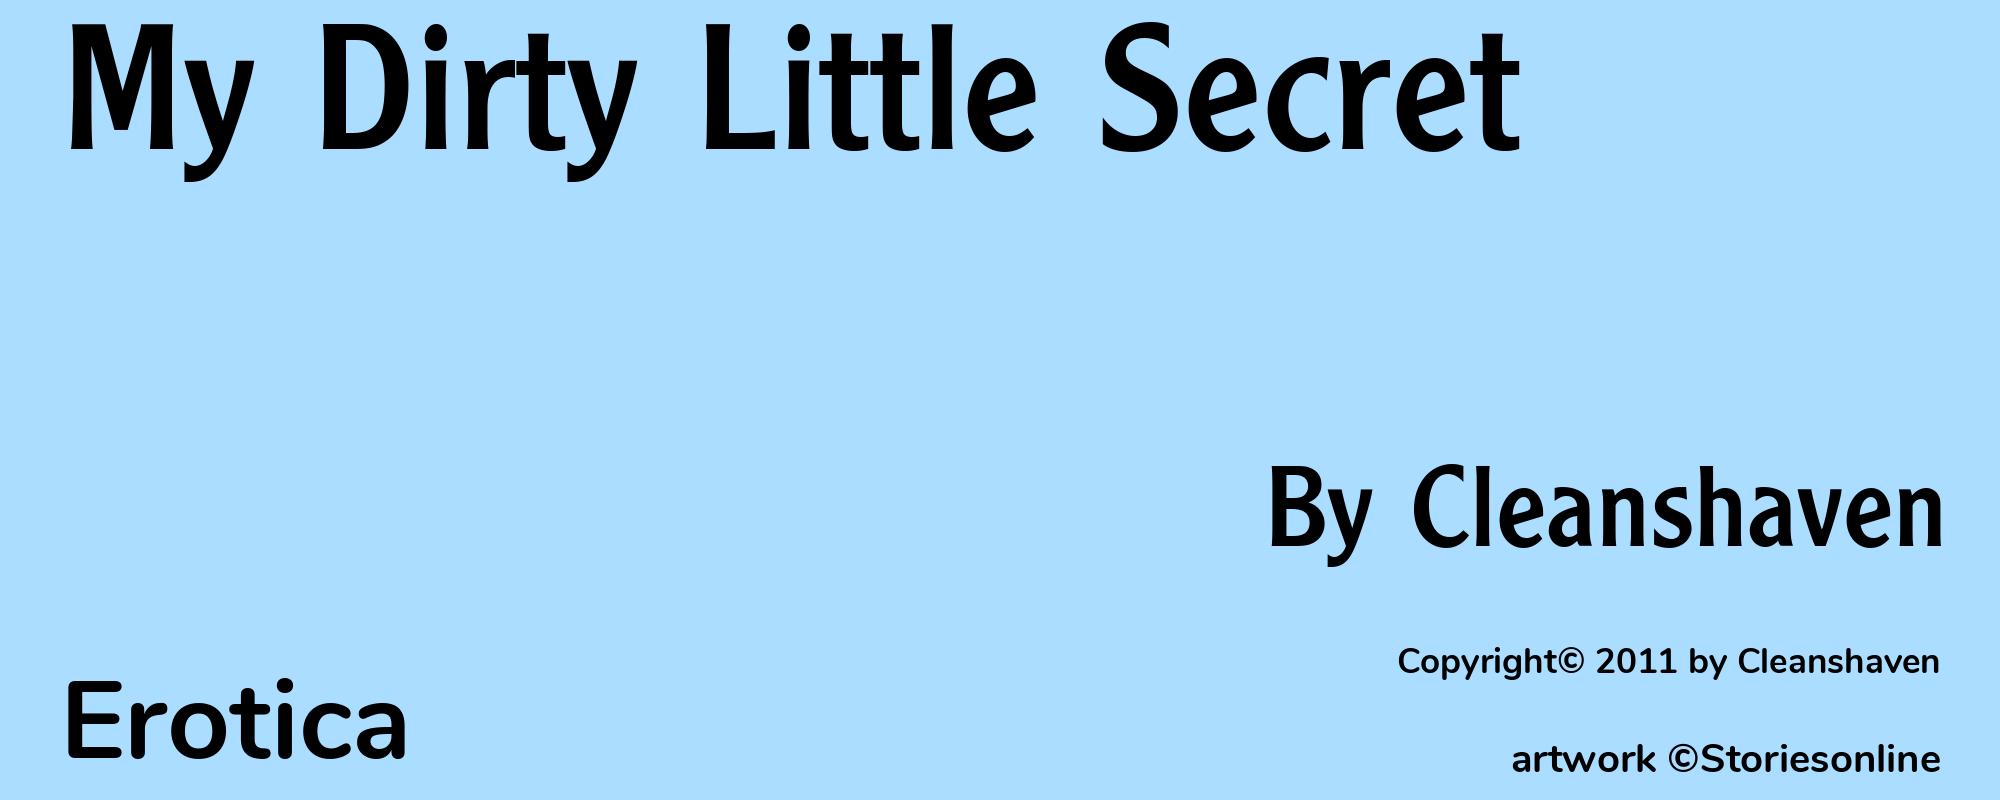 My Dirty Little Secret - Cover